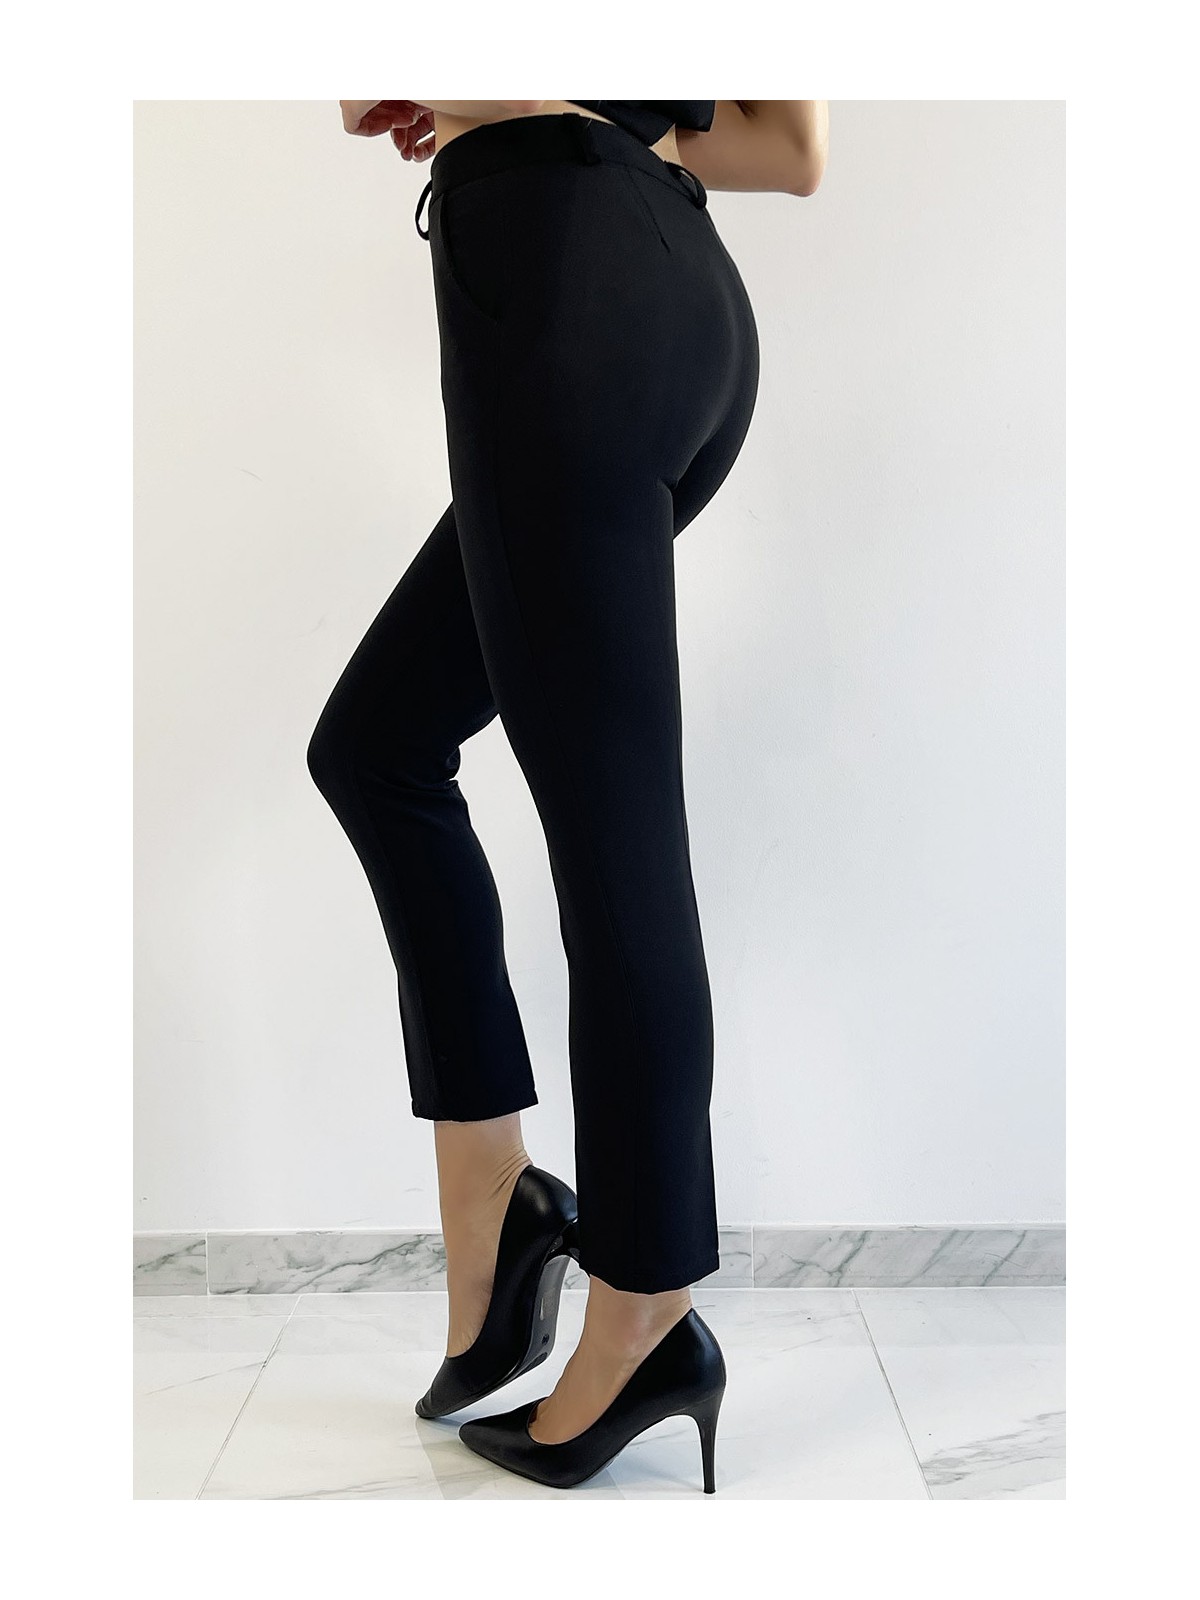 Pantalon slim noir avec poches style working girl - 2